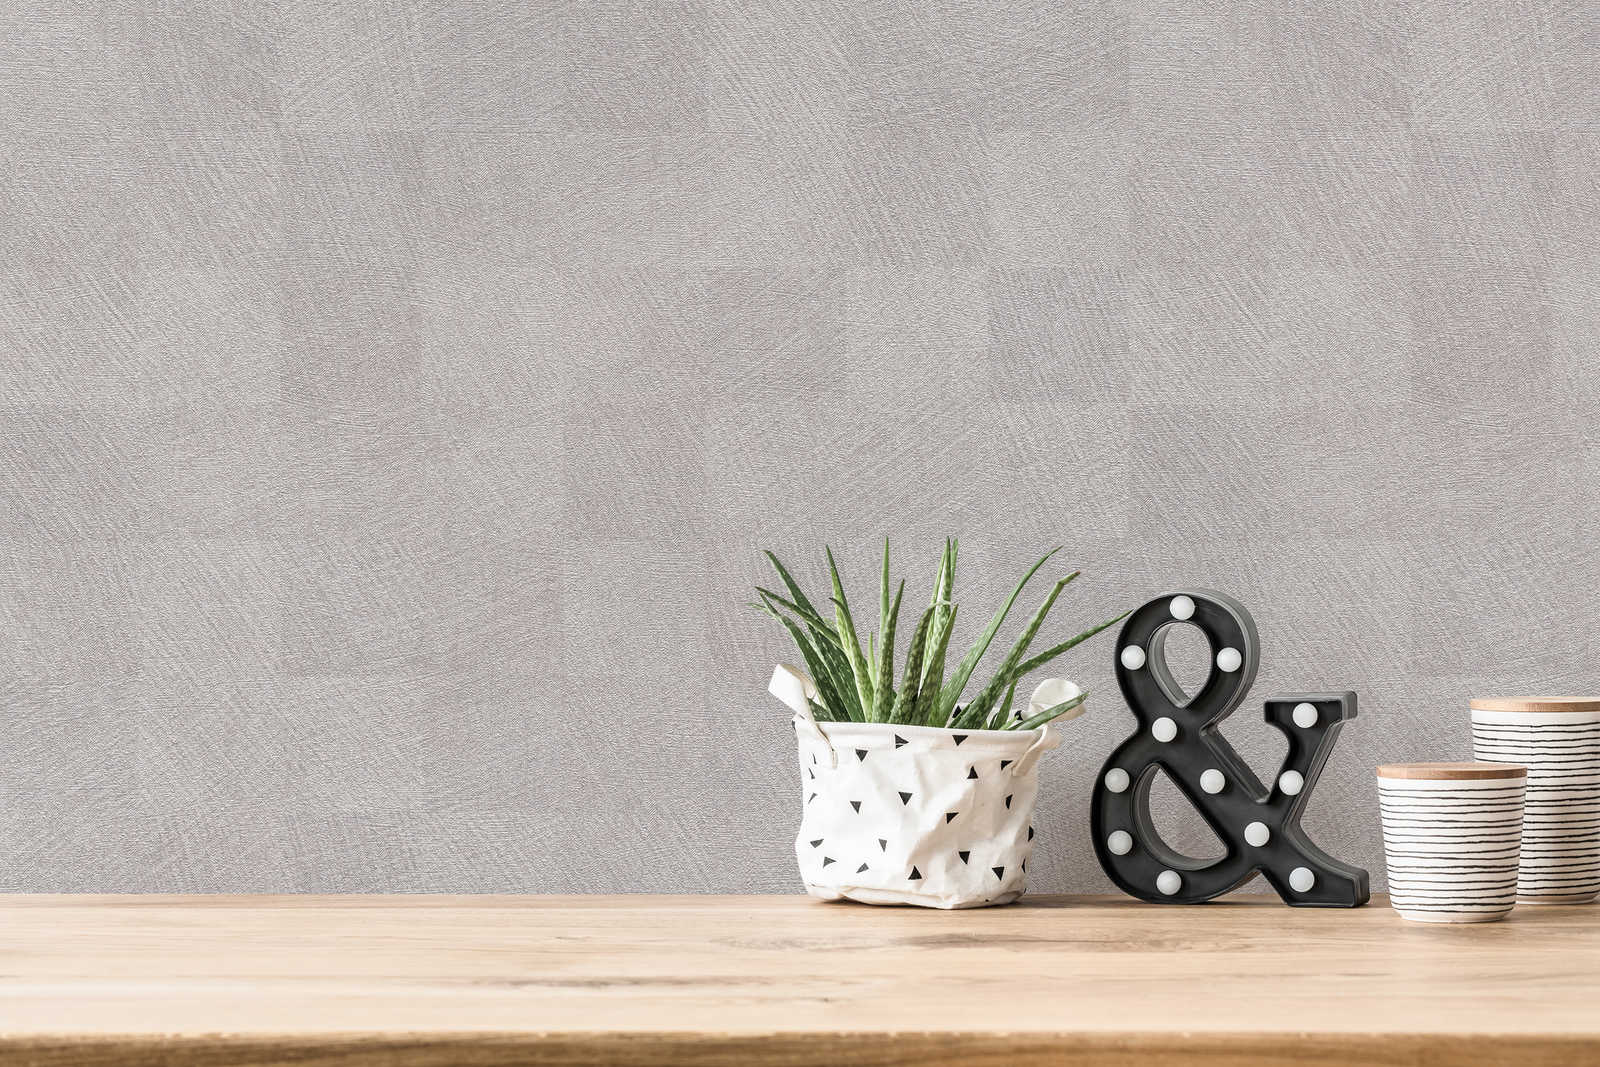             Plaid wallpaper beige metallic with texture effect
        